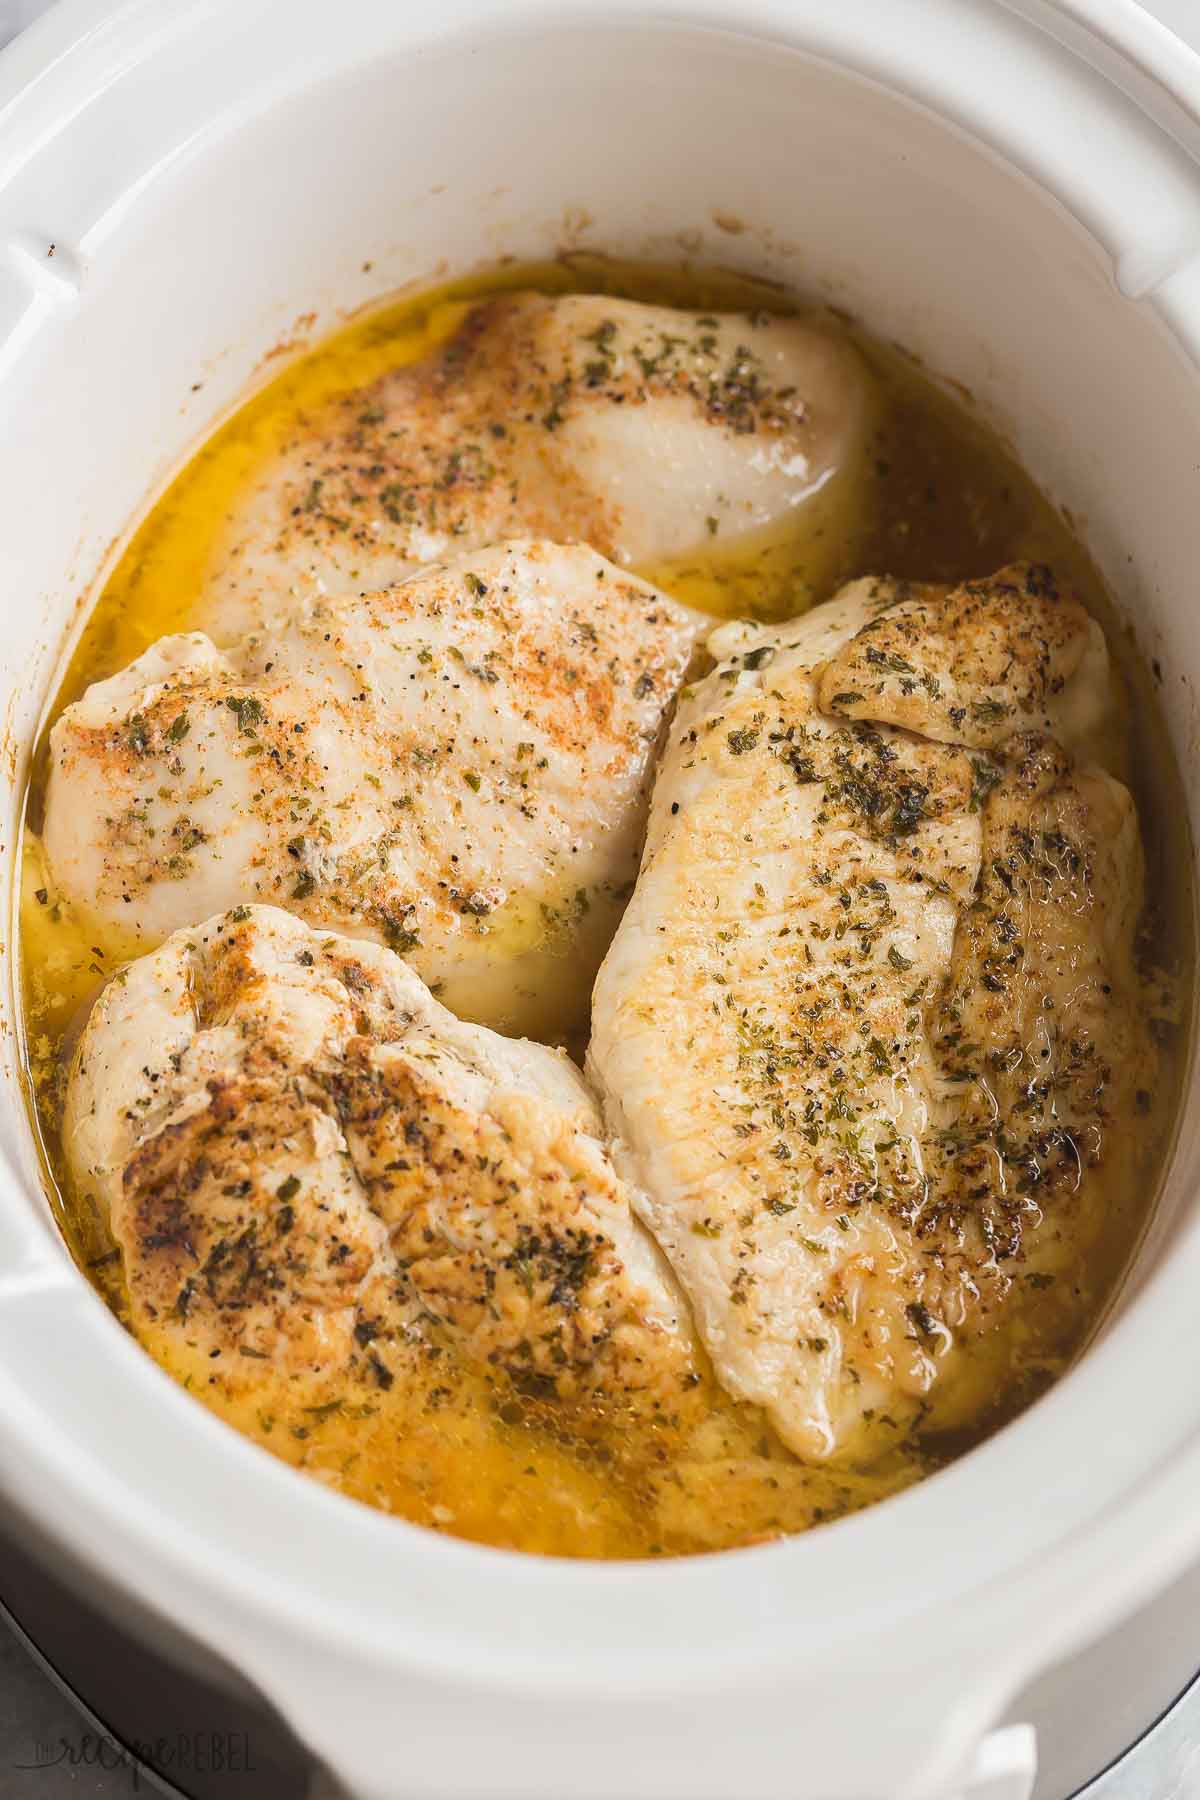 https://www.thereciperebel.com/wp-content/uploads/2019/05/slow-cooker-chicken-breast-www.thereciperebel.com-1200-3-of-17.jpg